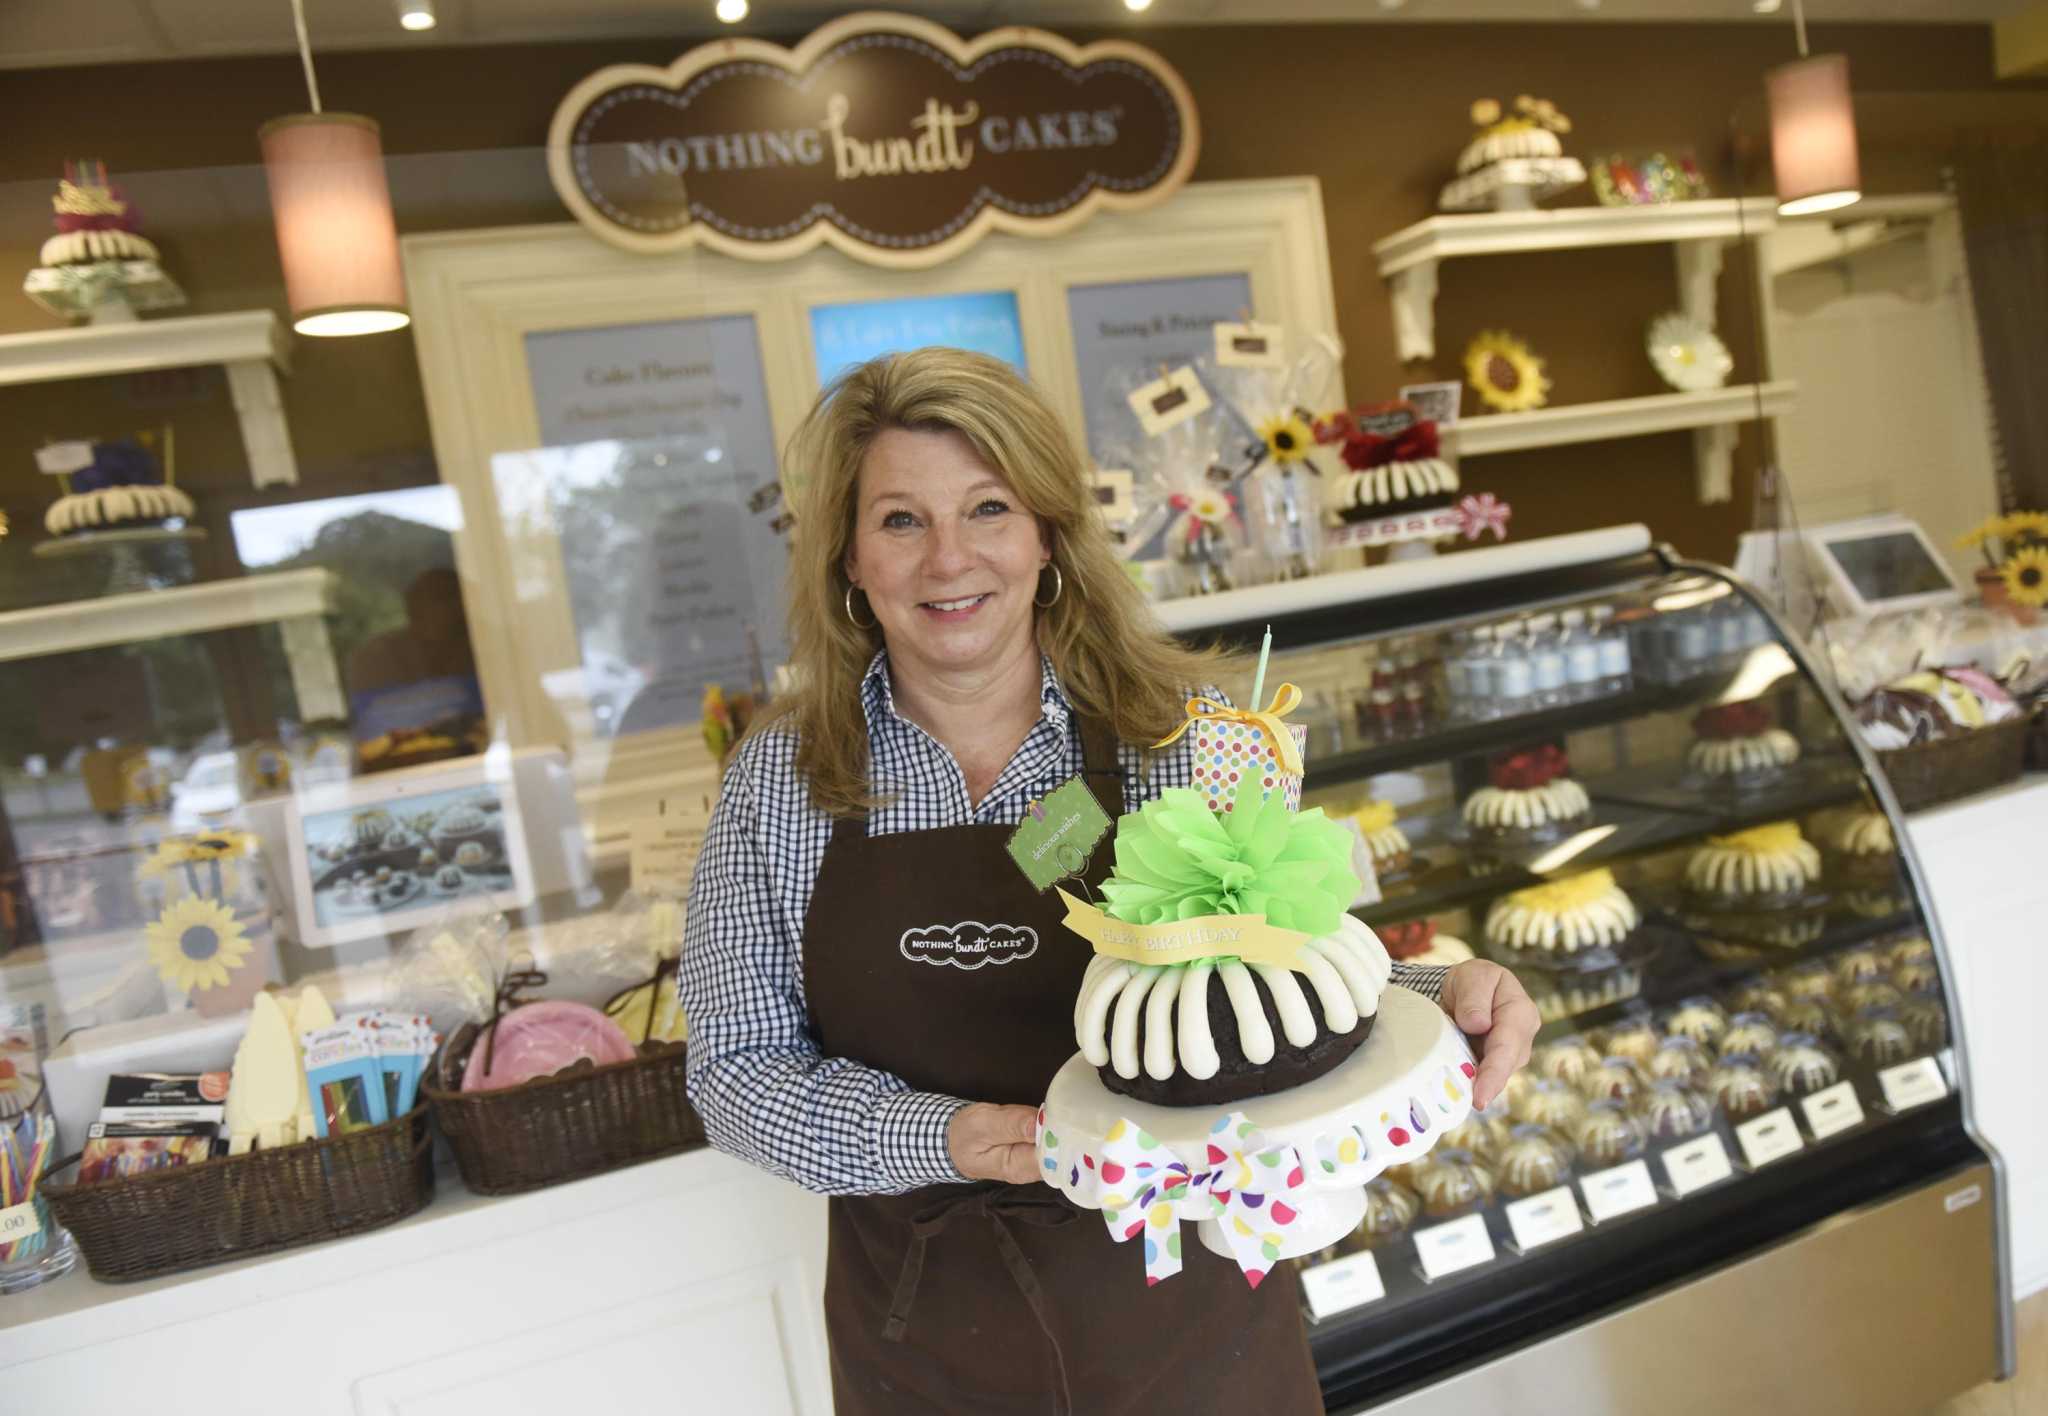 Meet the Baker: Nothing Bundt Cakes